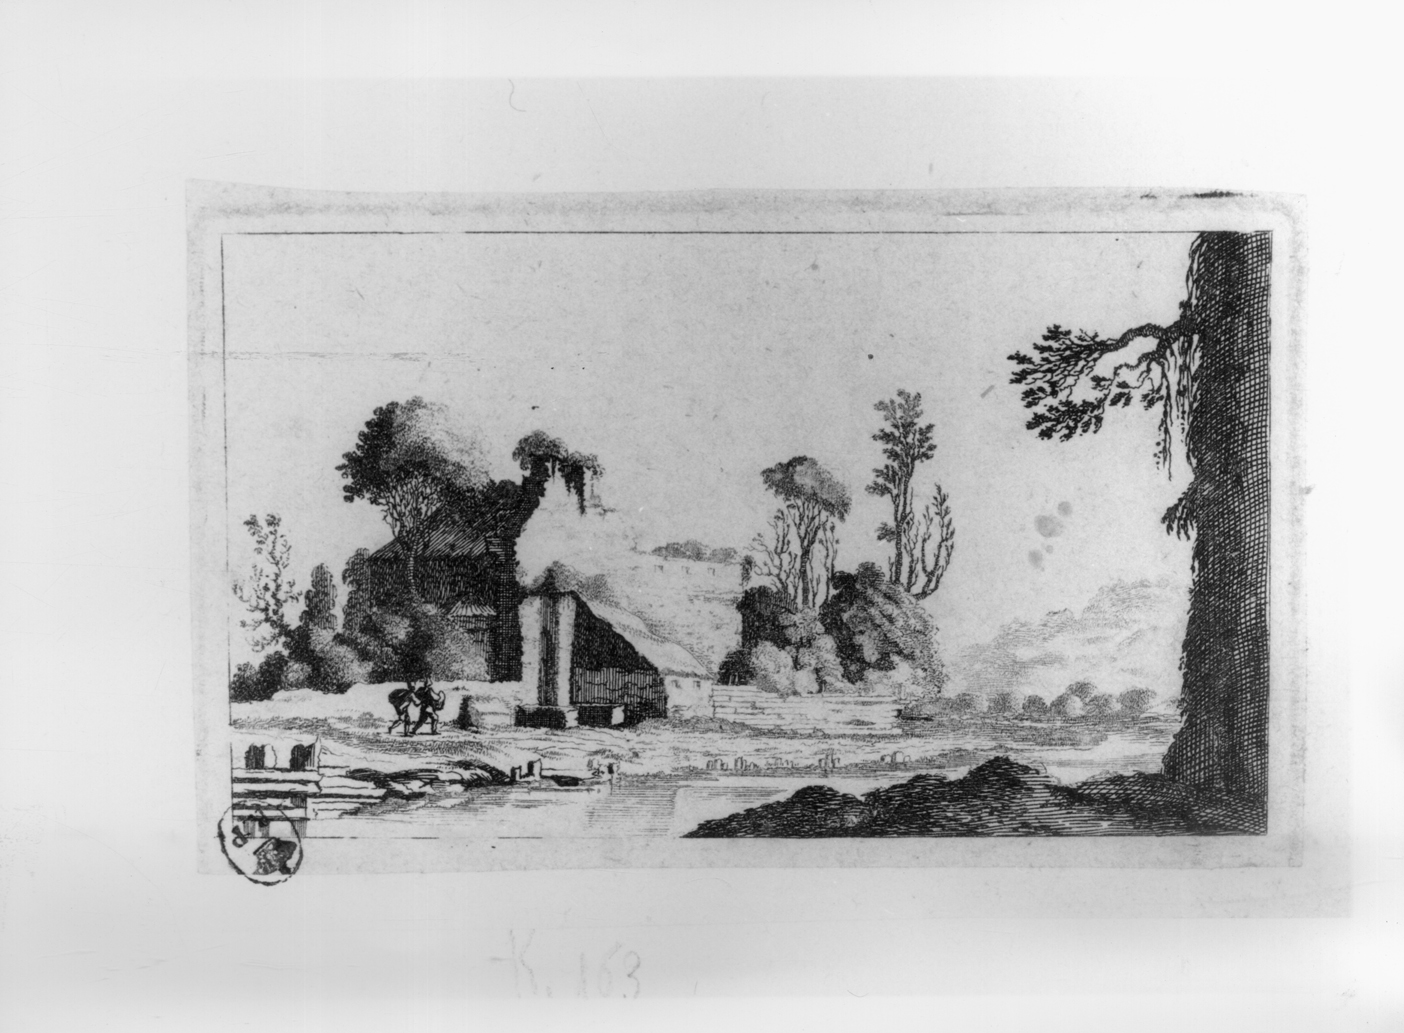 Paesaggio, paesaggio (stampa smarginata) di Visscher I Claes Claesz - ambito olandese (terzo quarto sec. XVII)